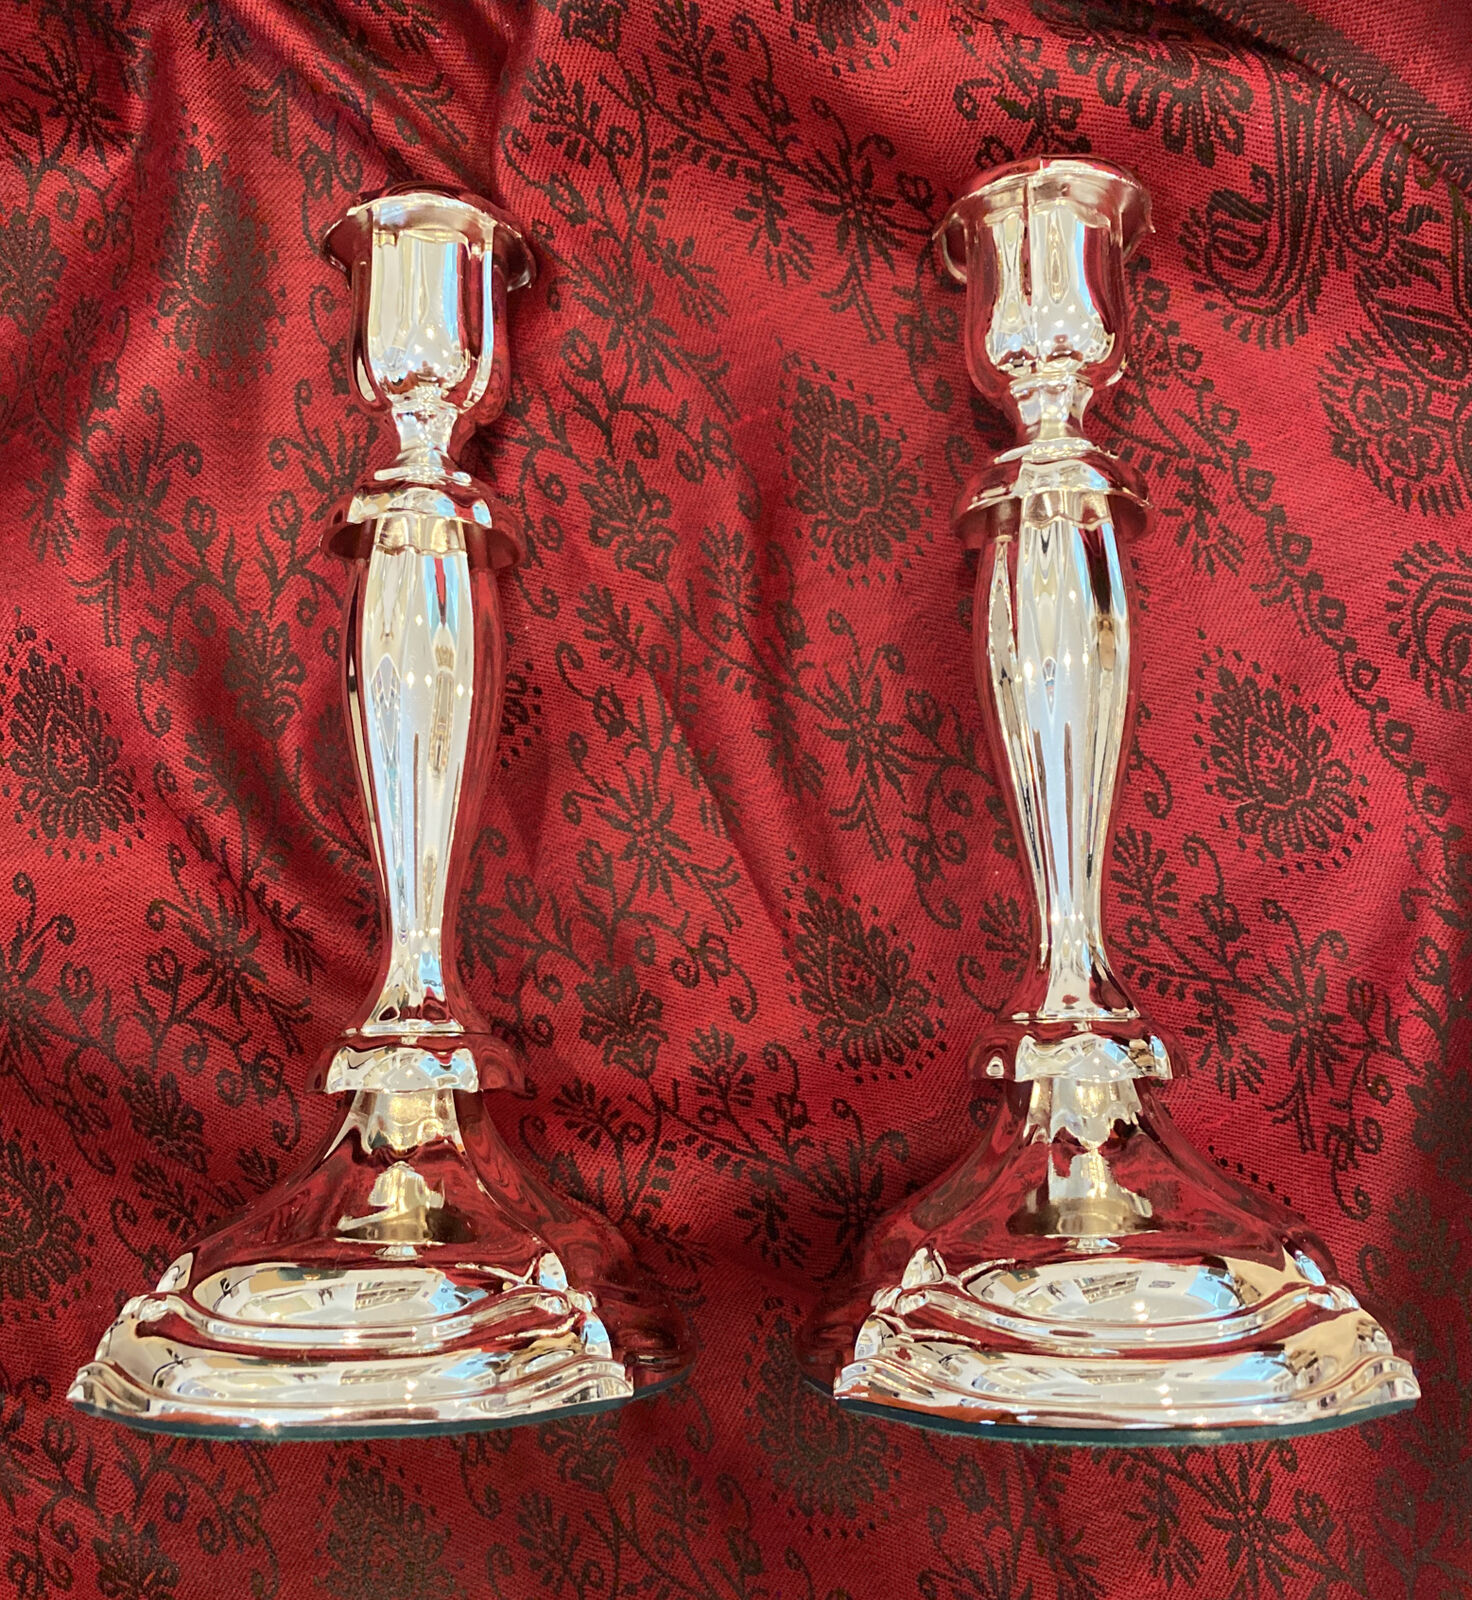 Stunning Set of 9” Ornate Silverplate Candlesticks by Oneida Japan